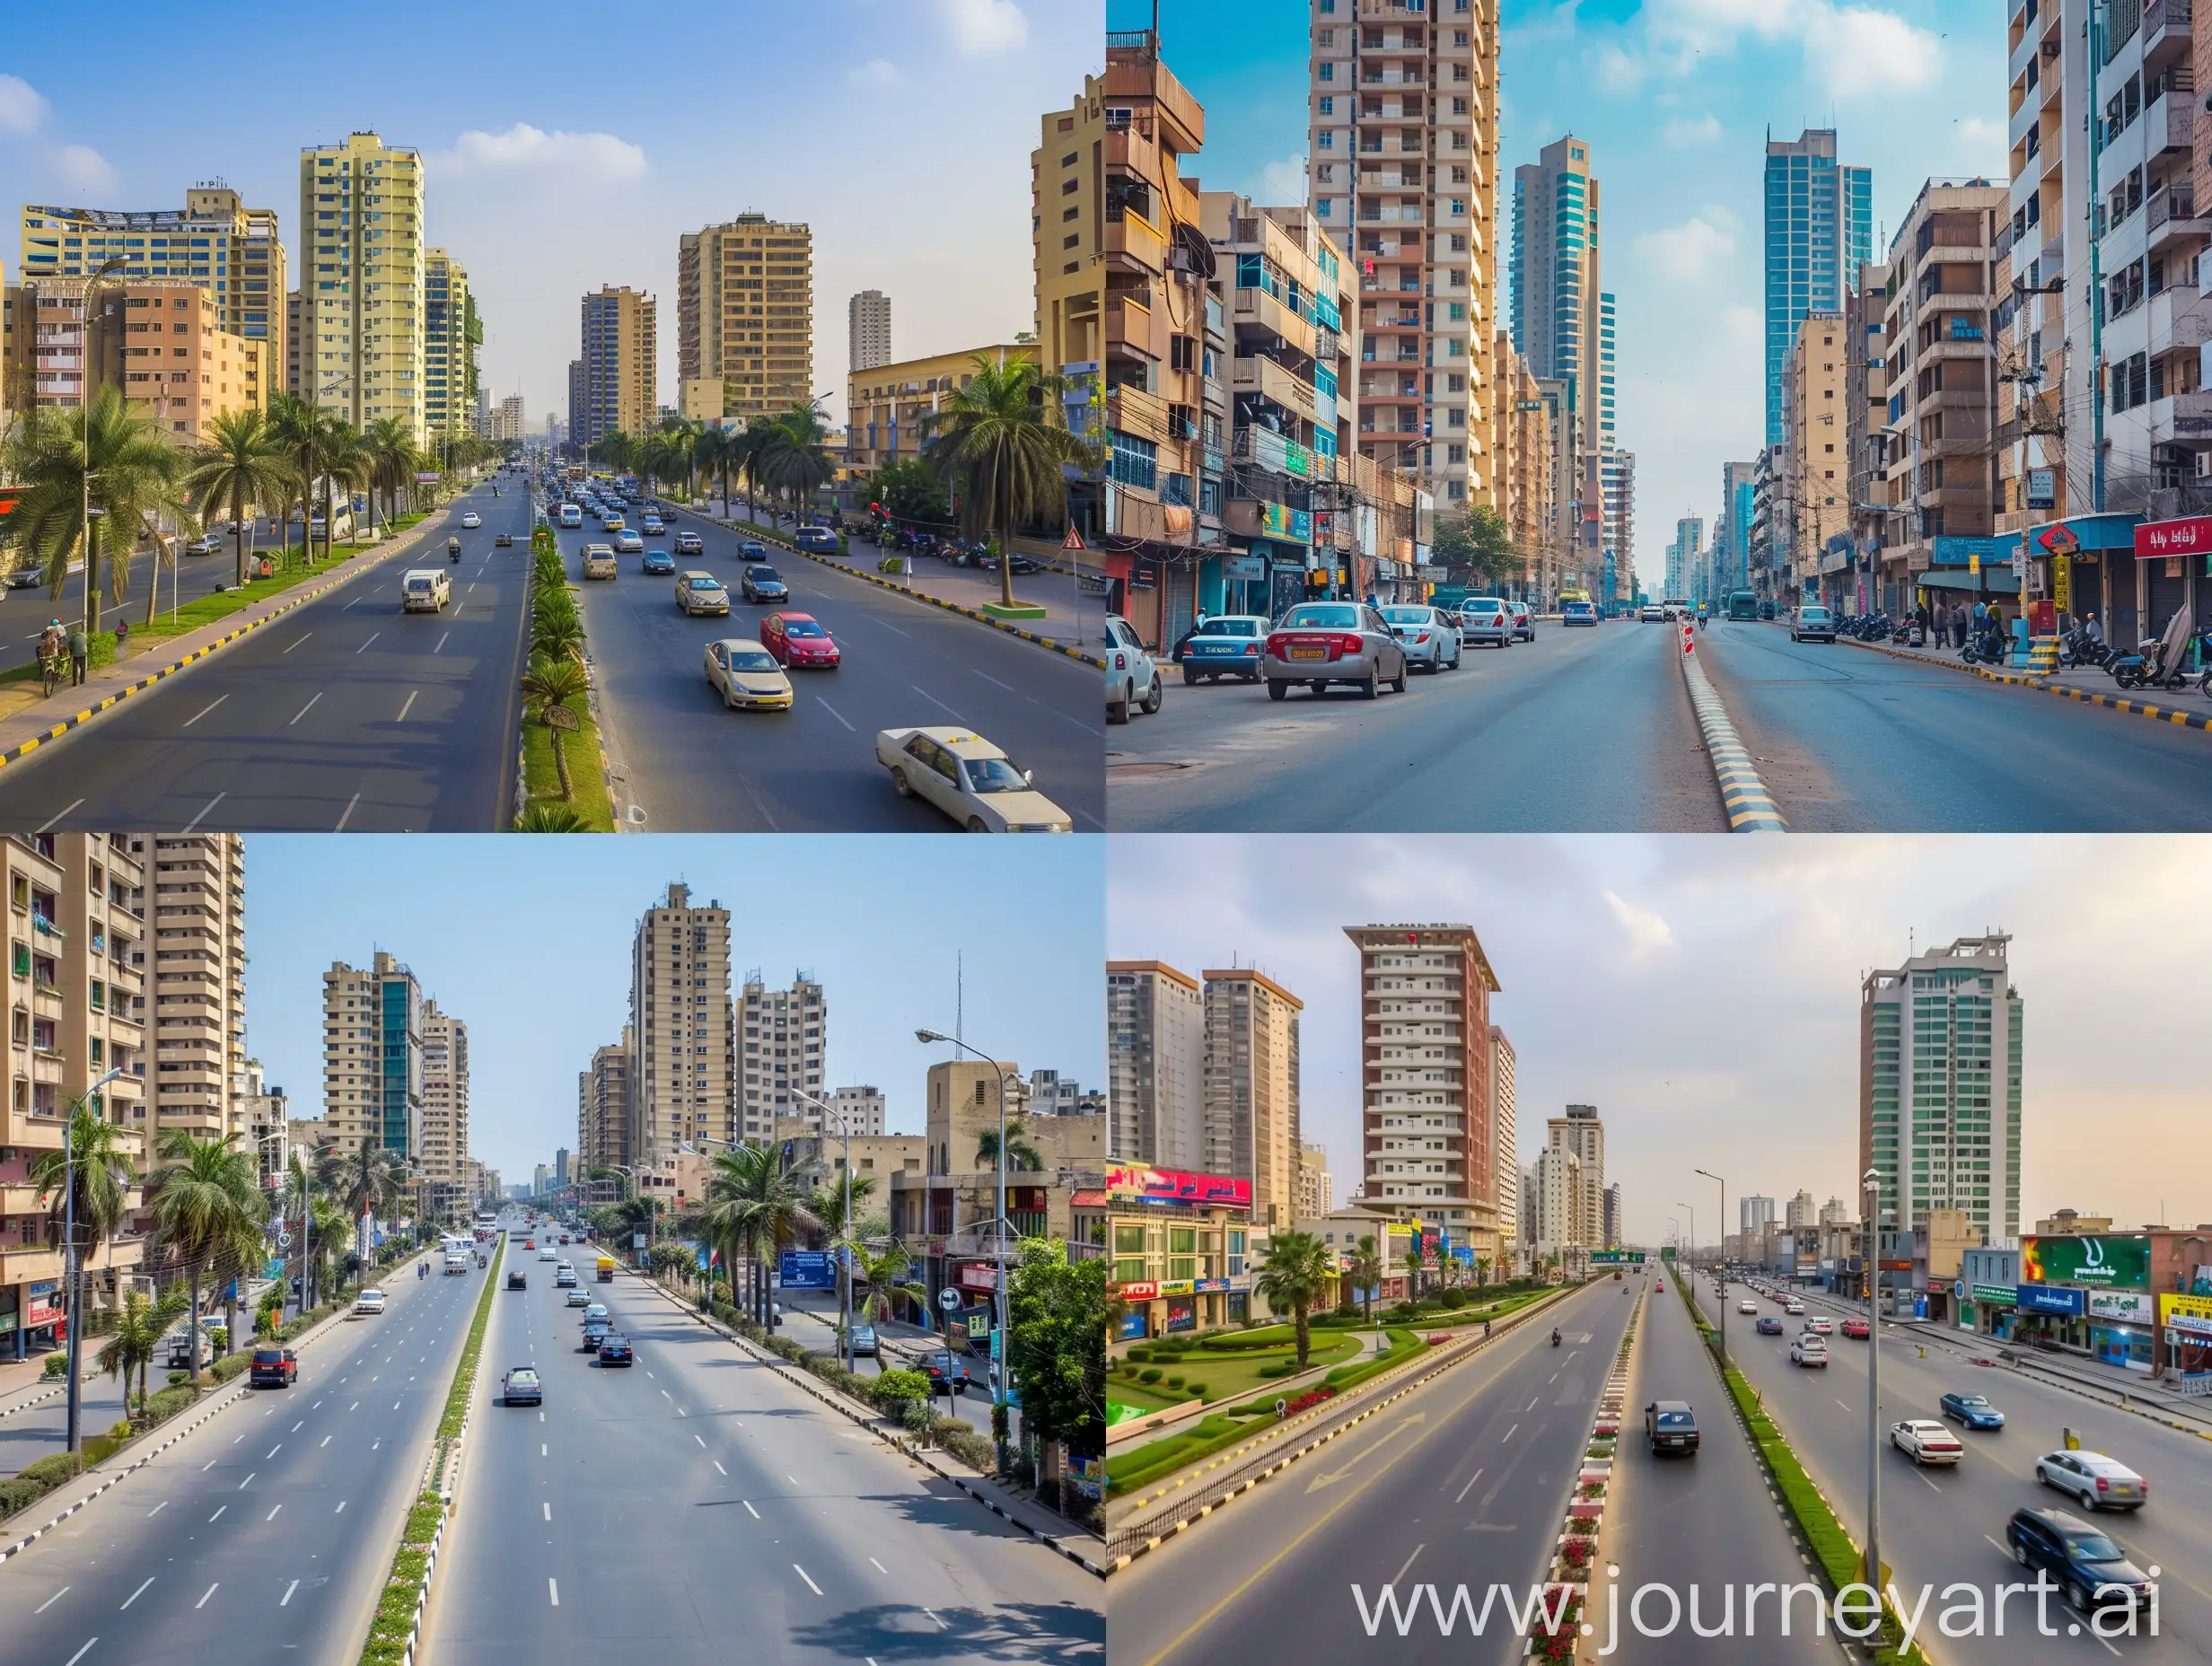 smart modern city of Karachi in Pakistan, real stock photo, street view.